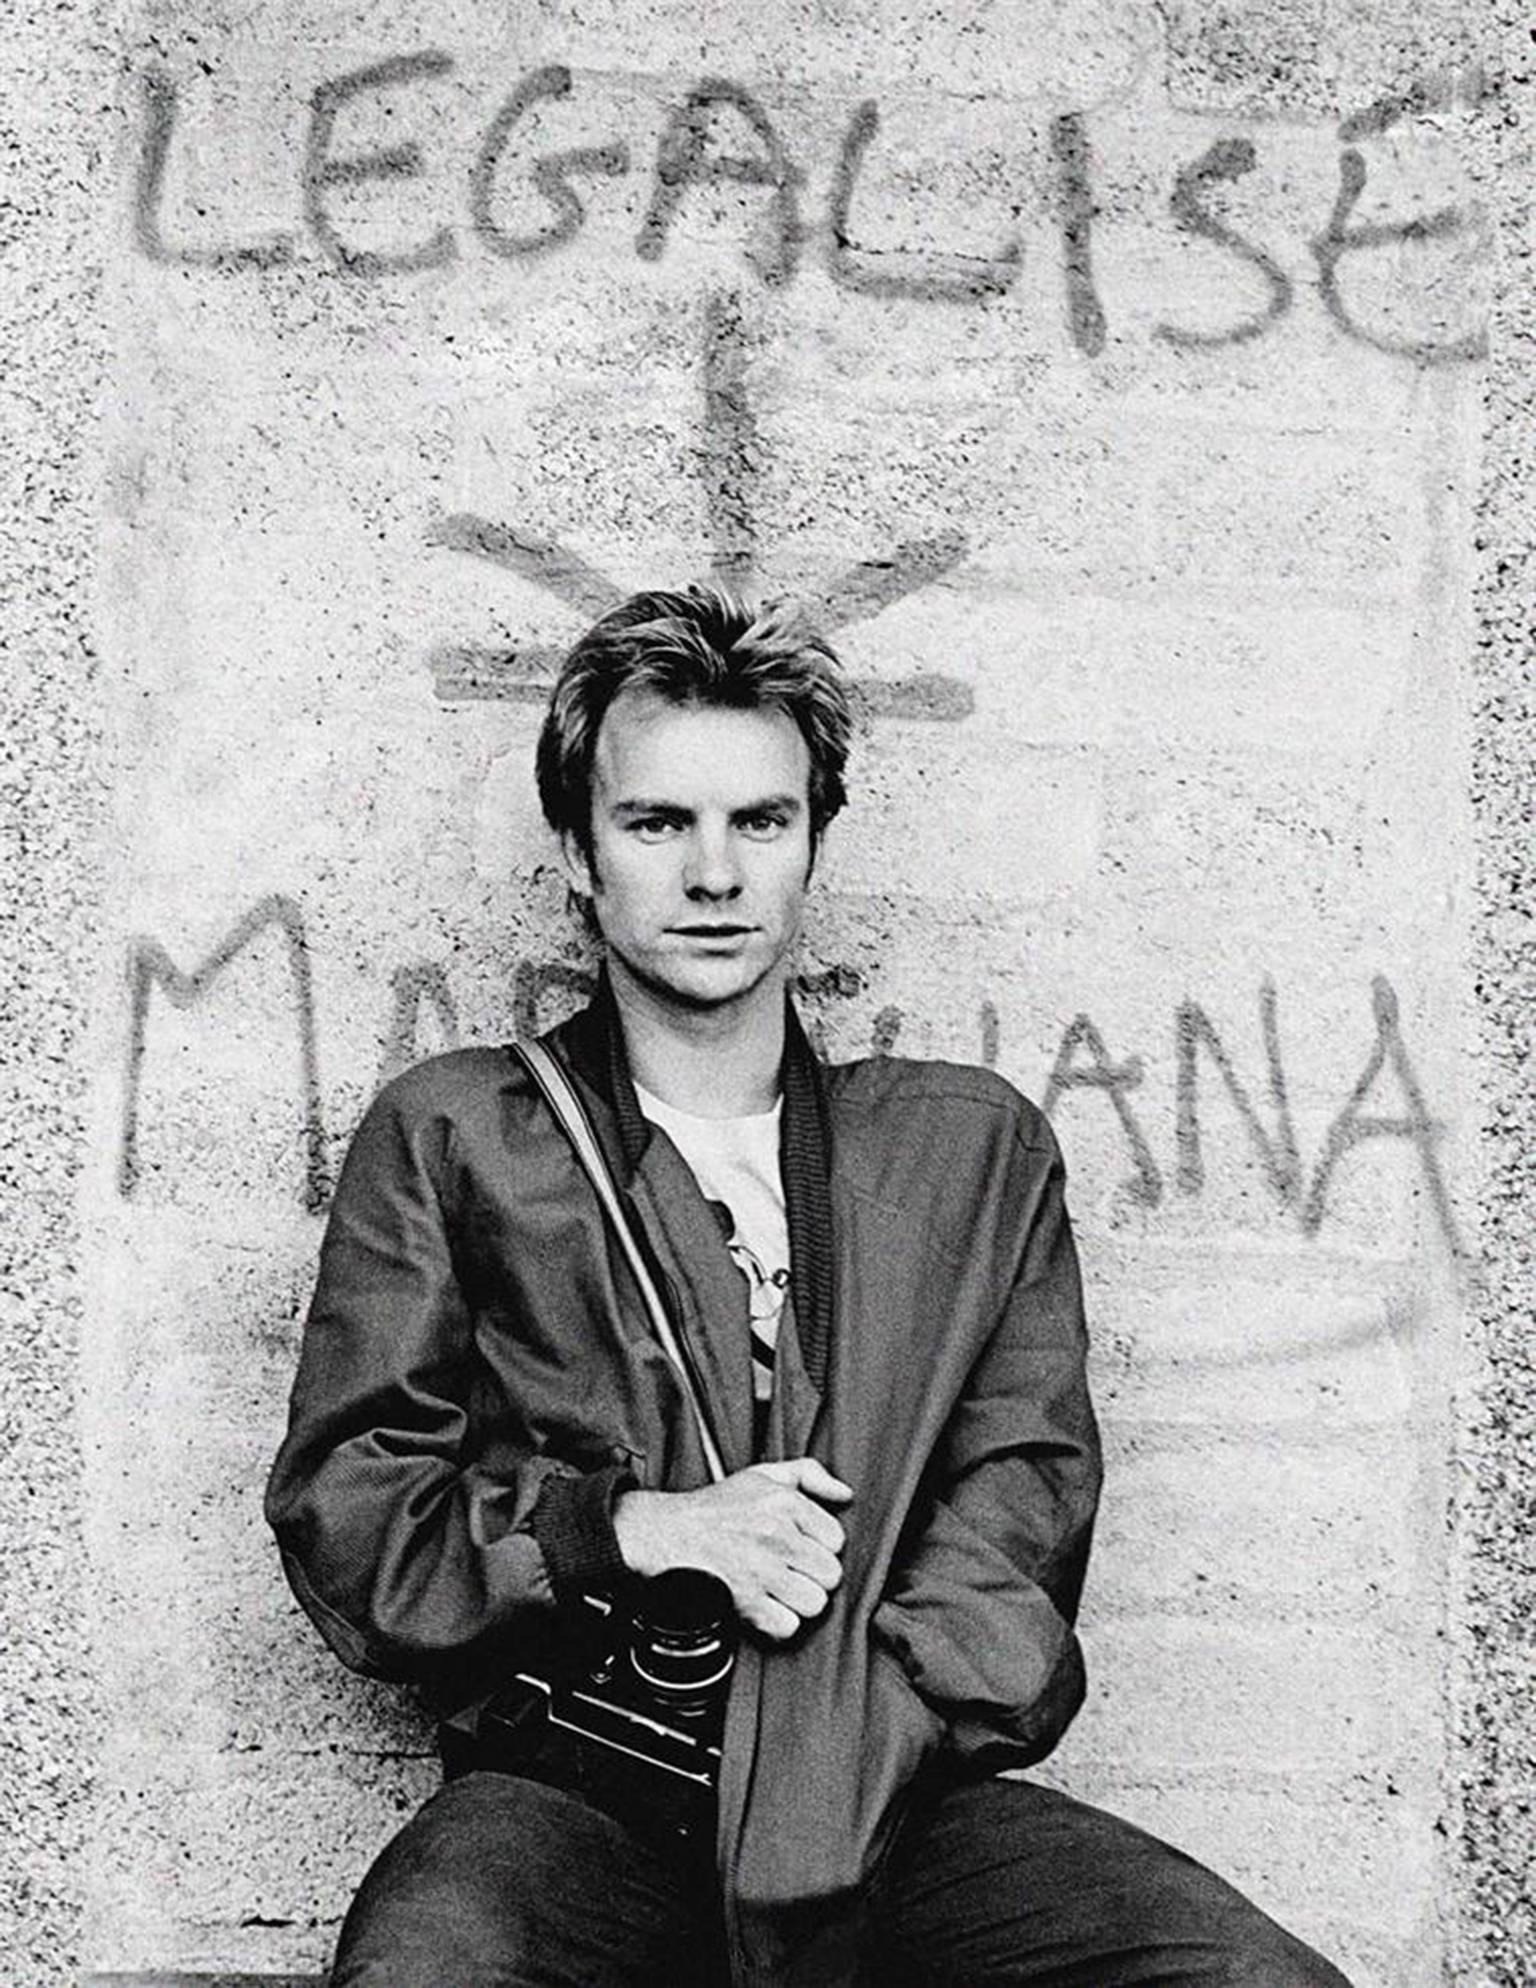 Colm Henry Black and White Photograph - Sting and Marijuana graffiti